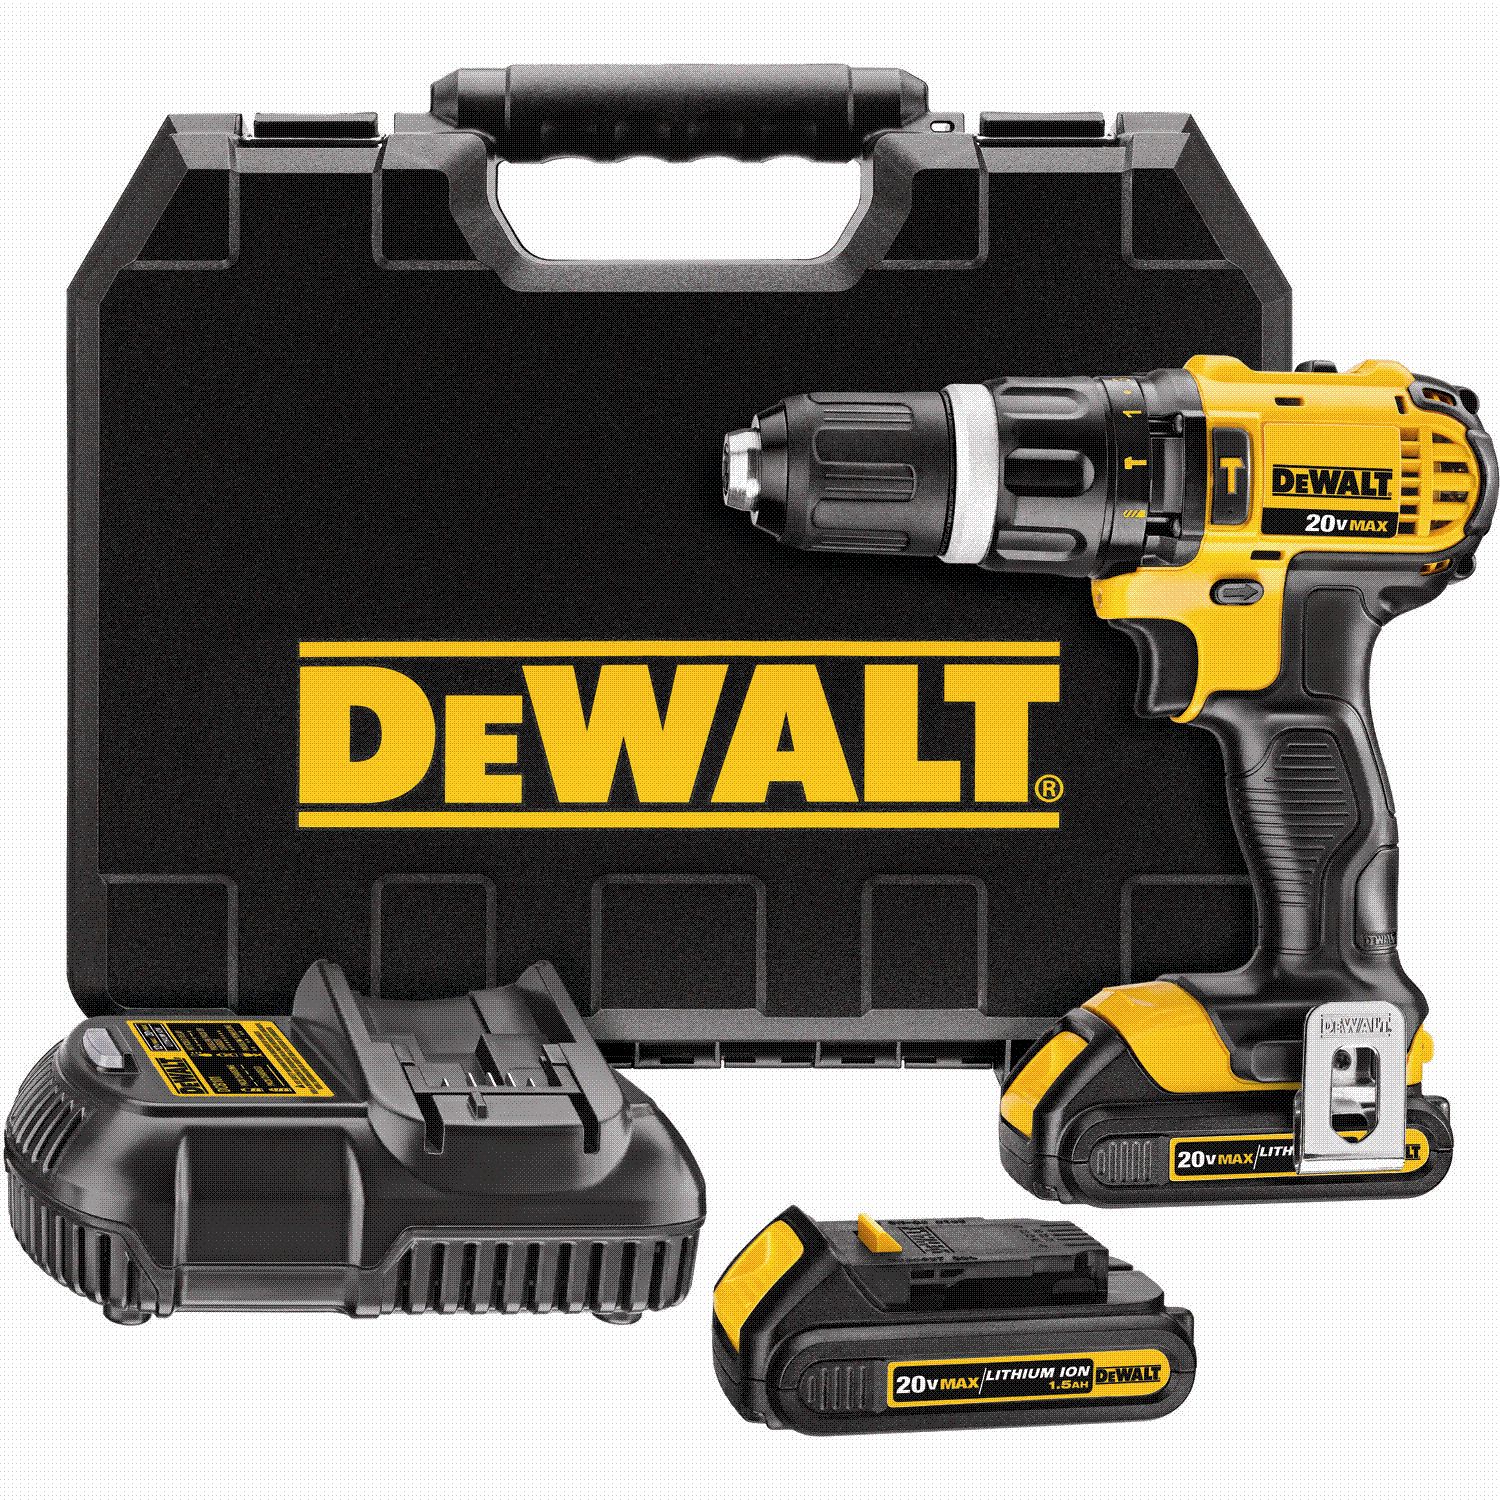 DeWalt 20V MAX Lithium-Ion Compact Hammer Drill Kit